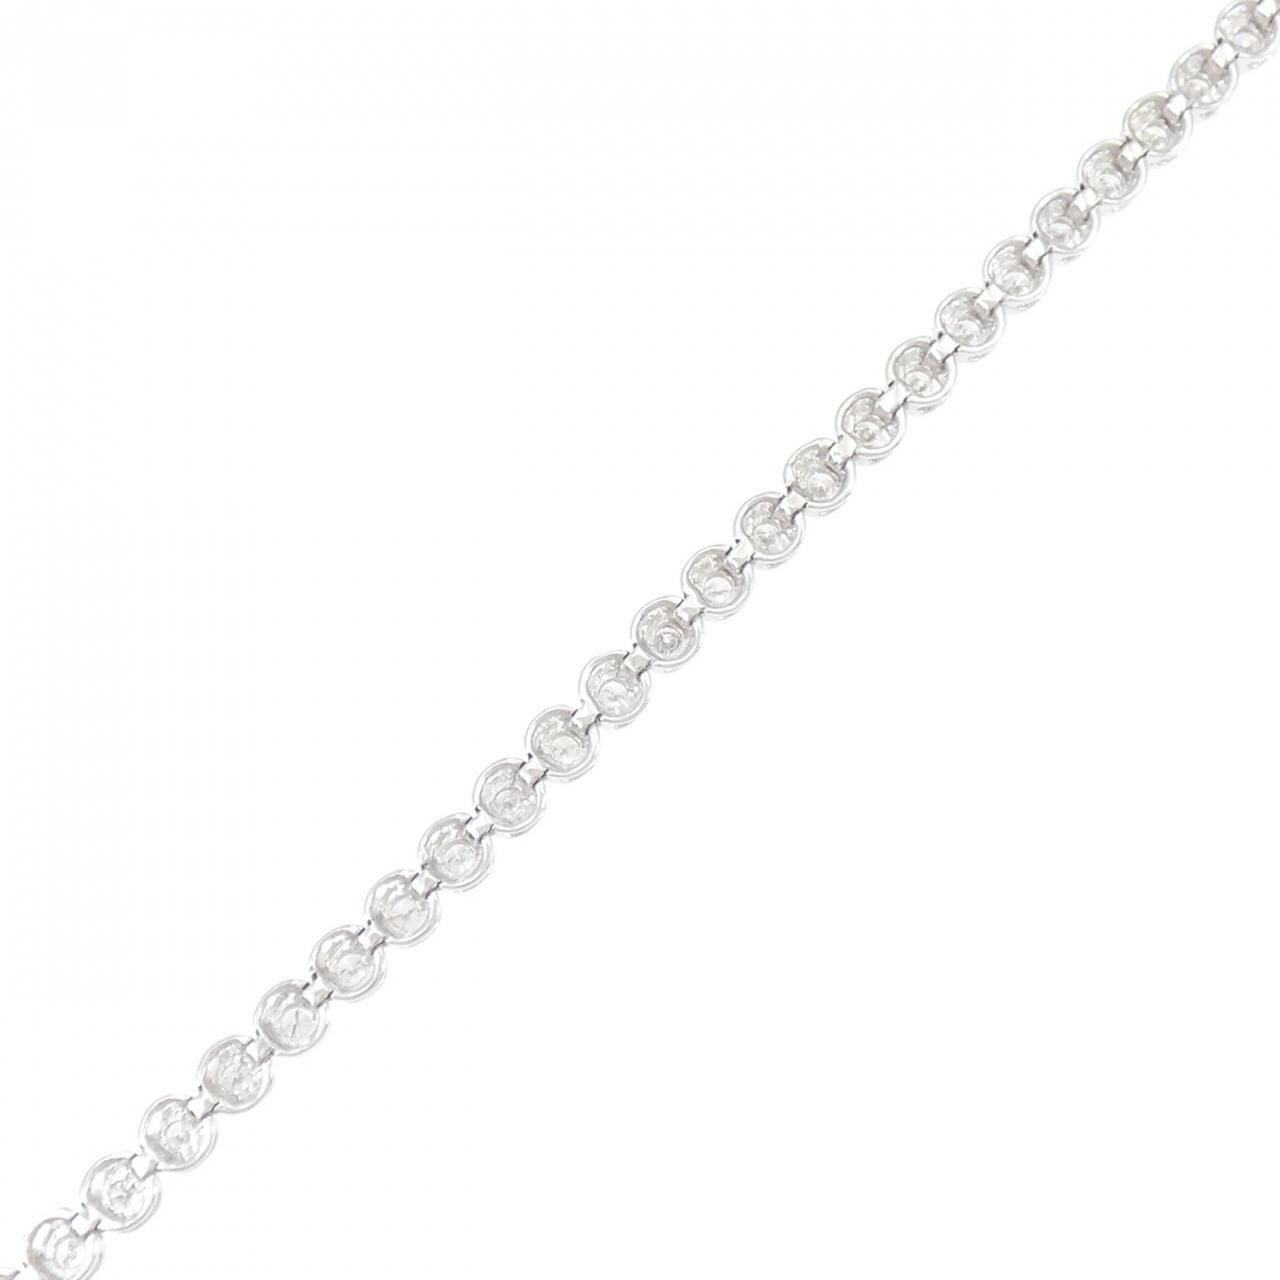 K18WG Diamond bracelet 1.0CT